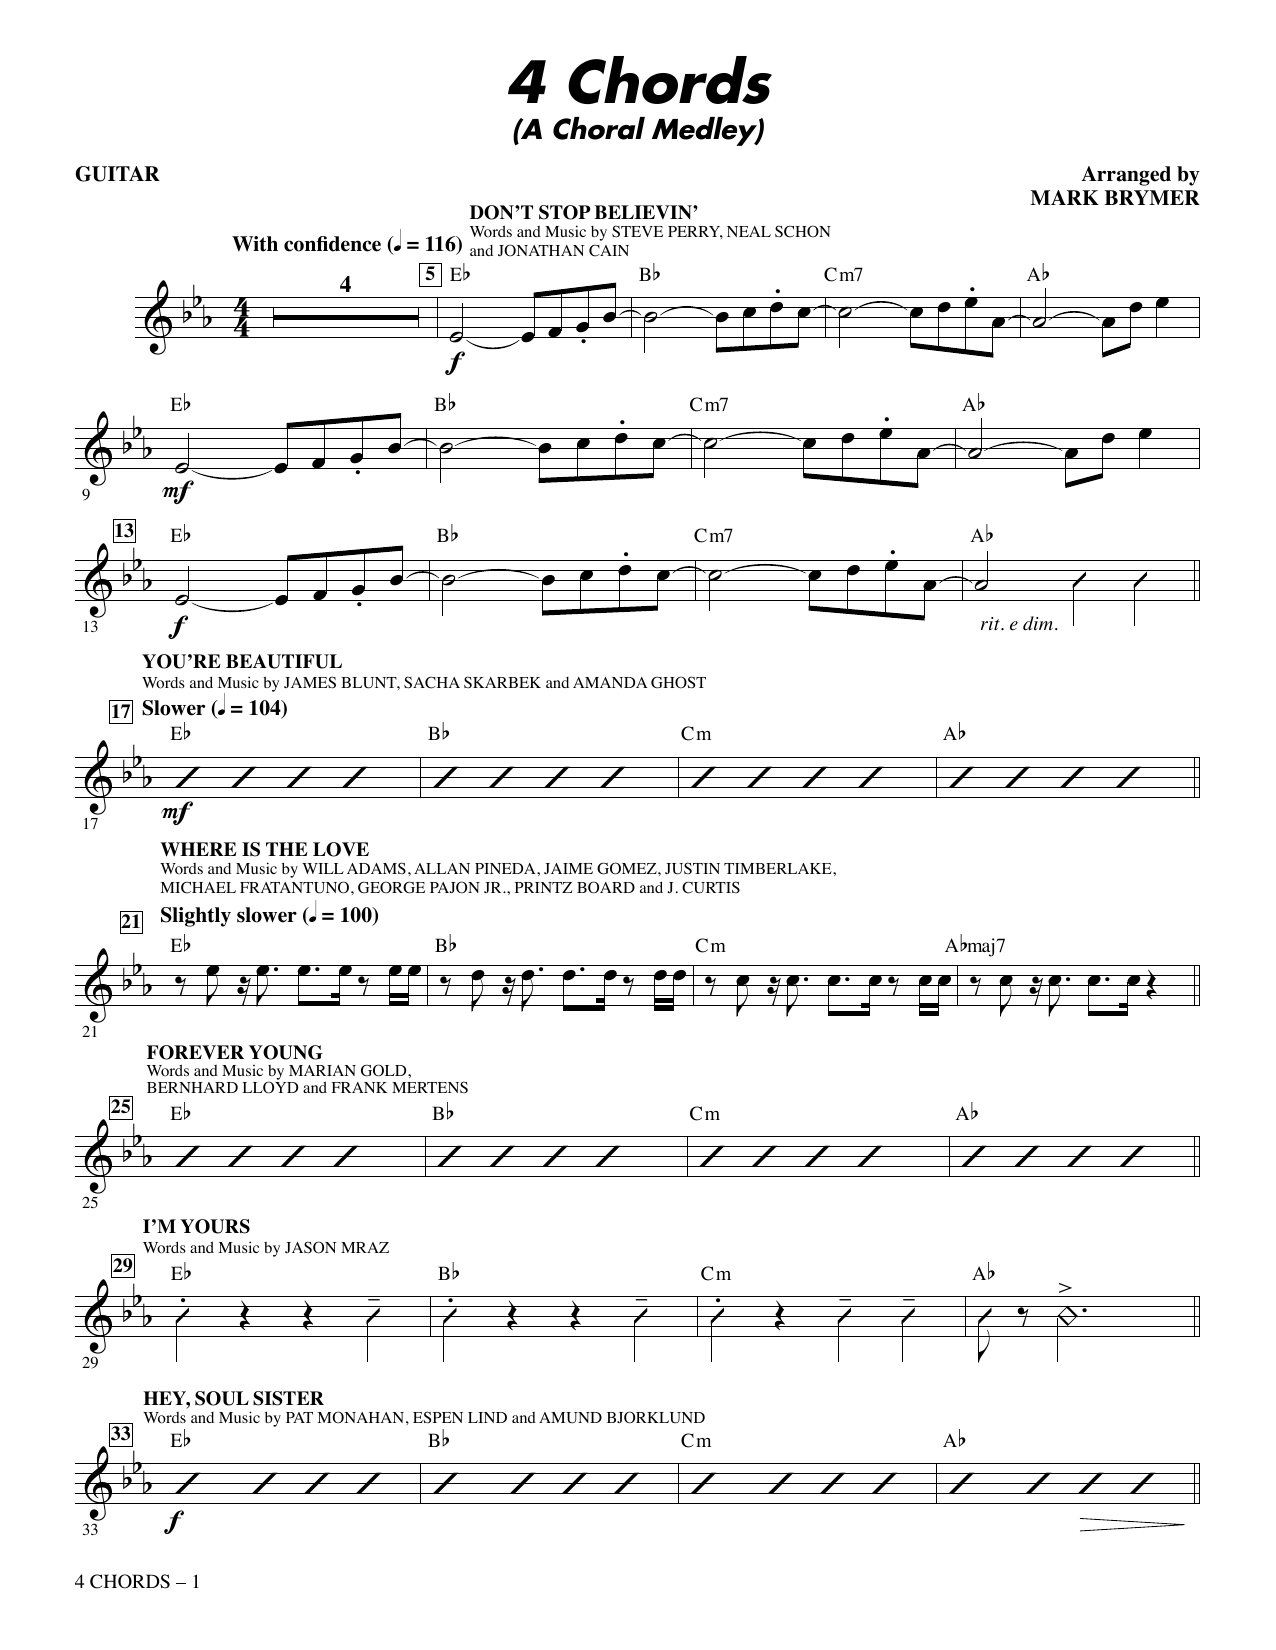 Mark Brymer 4 Chords A Choral Medley Guitar Sheet Music Notes Download Printable Pdf 